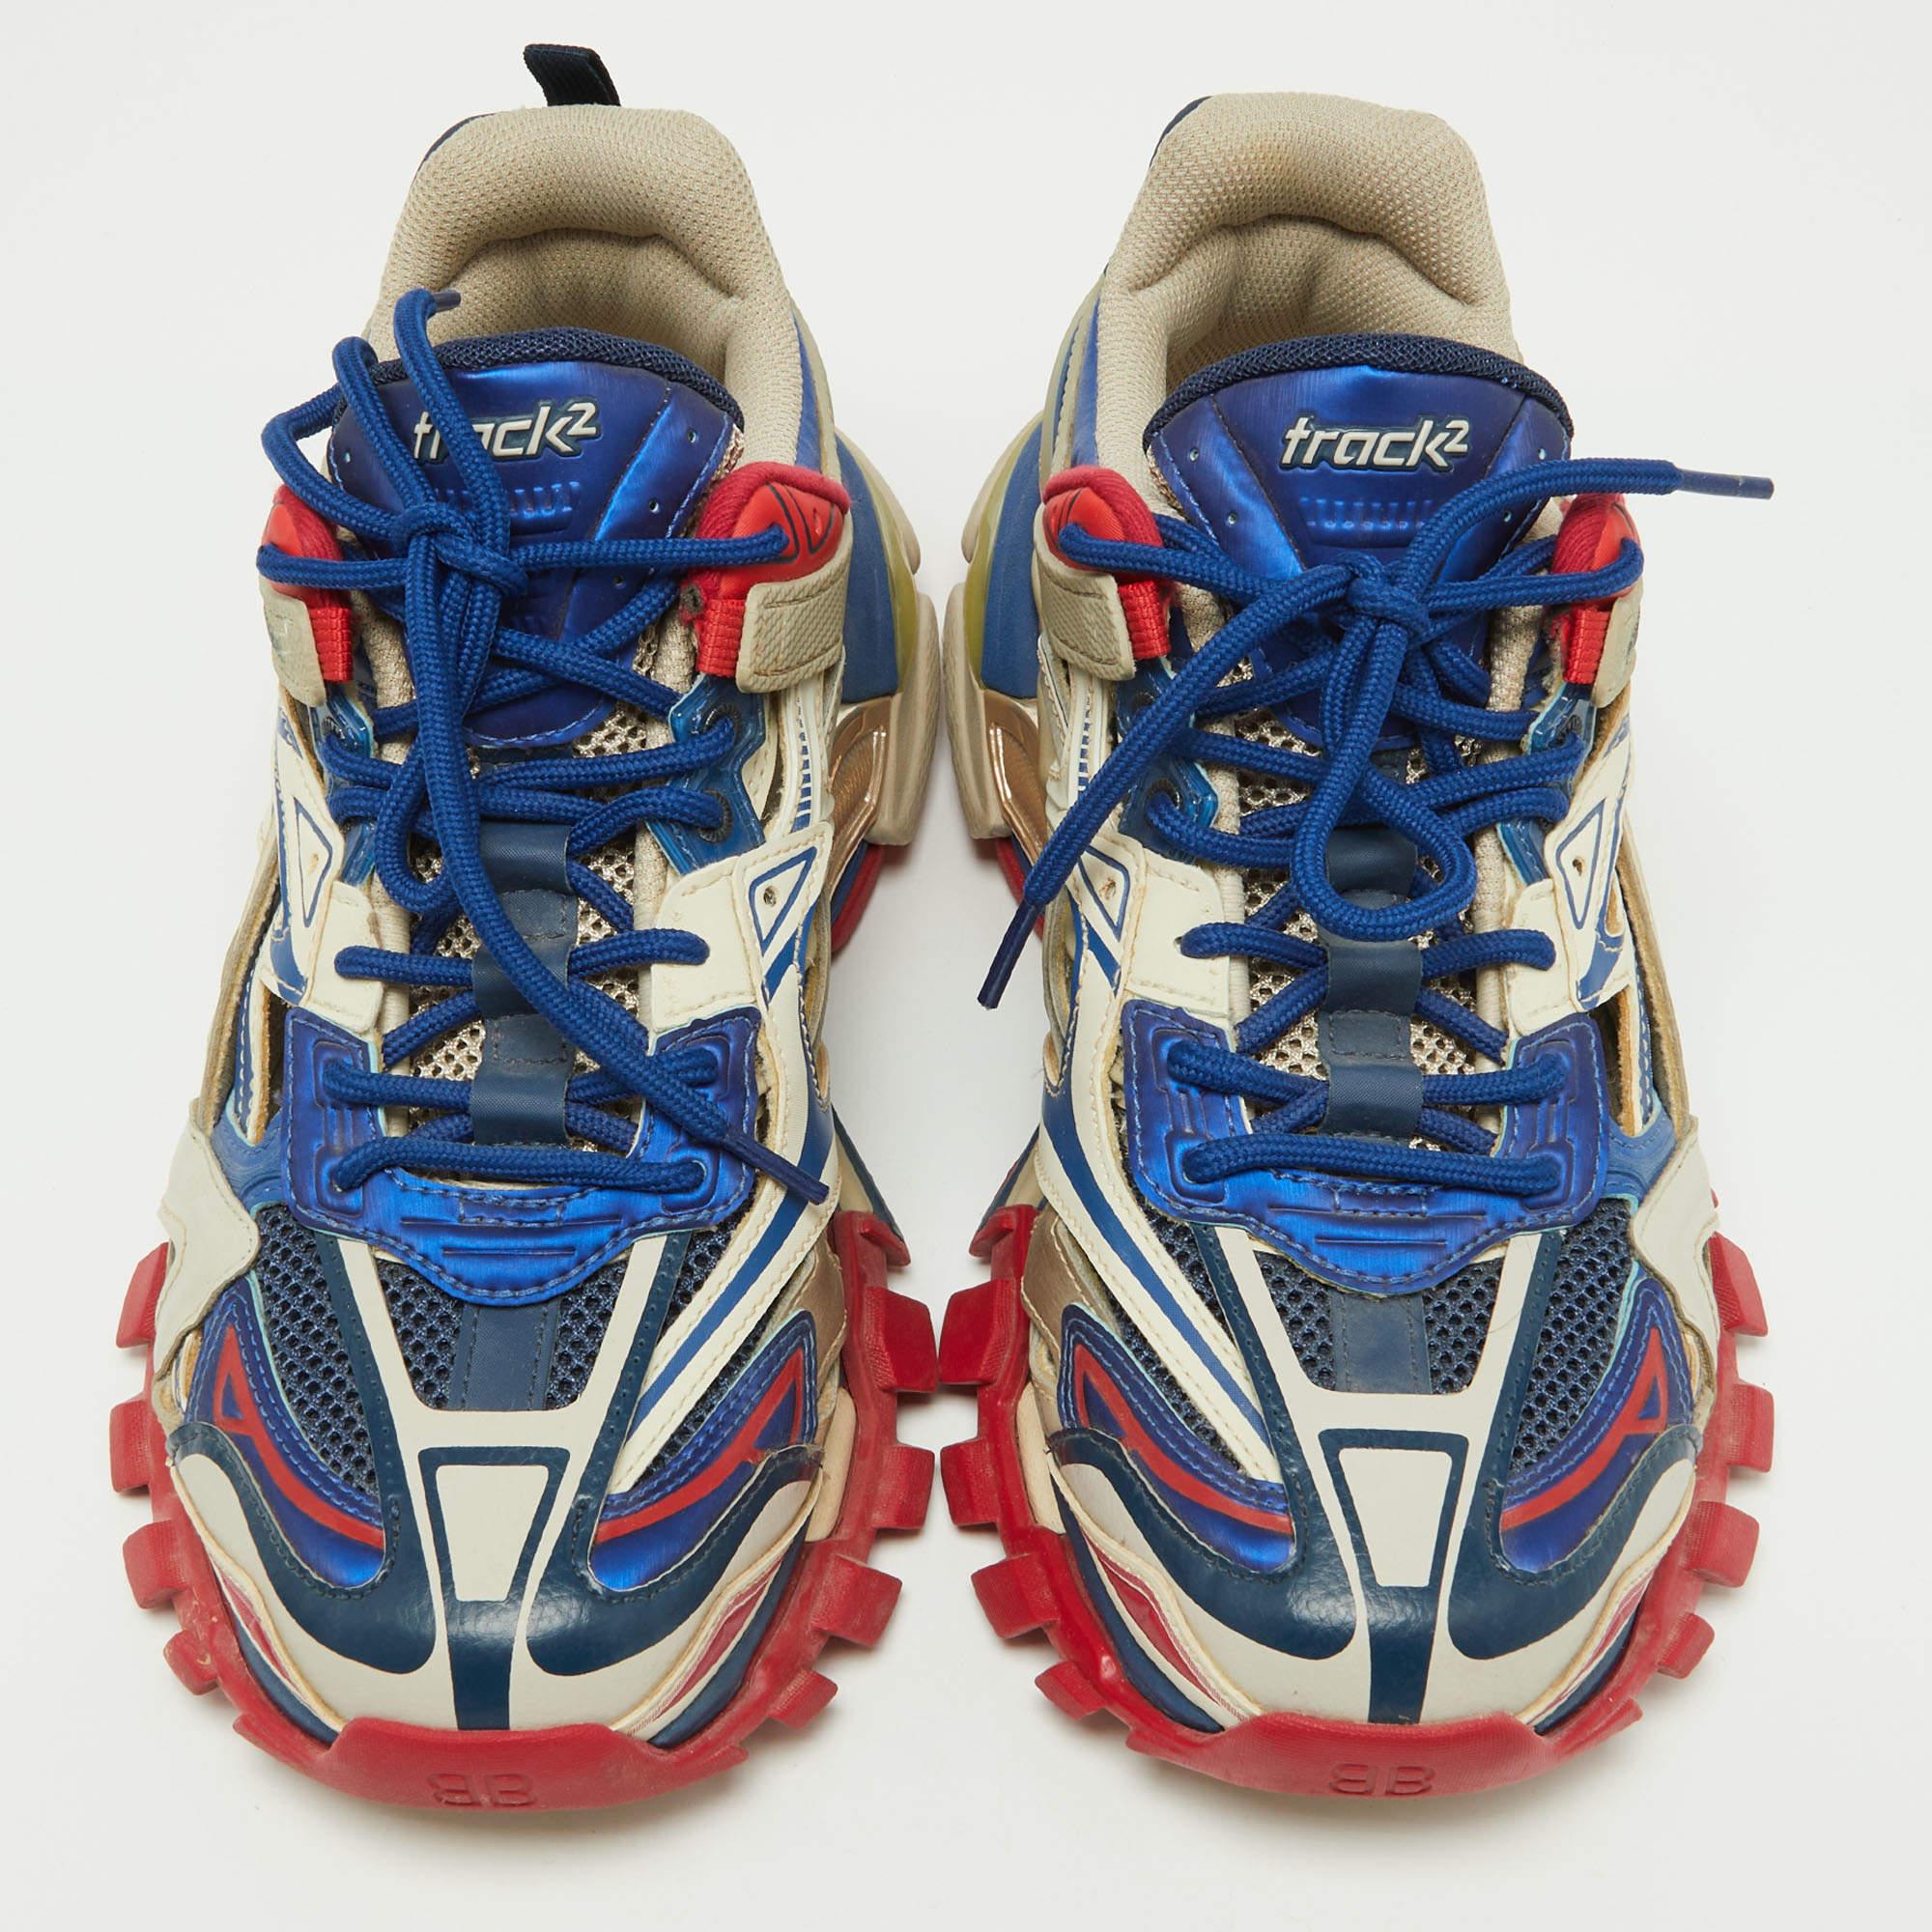 Balenciaga Tricolor Rubber and Mesh Track 2 Sneakers Size 41 1